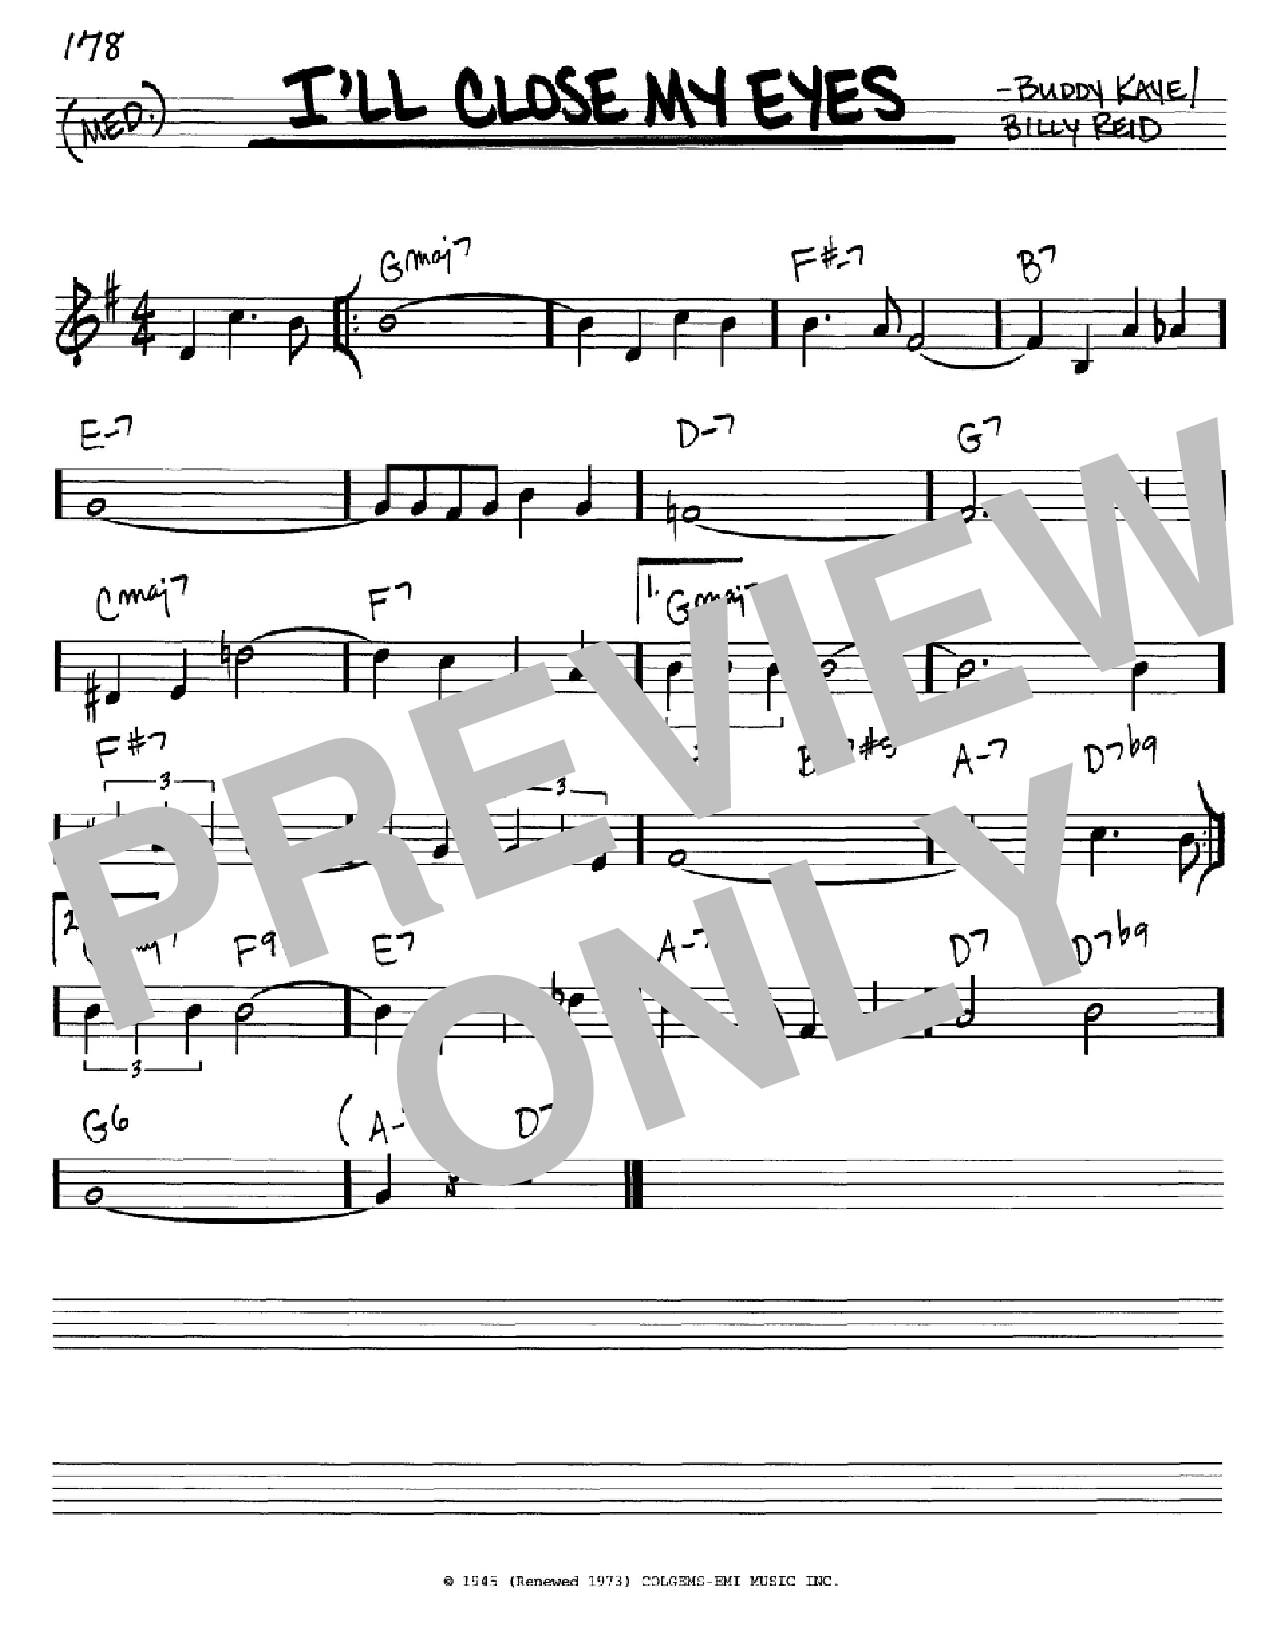 Buddy Kaye I'll Close My Eyes sheet music notes and chords arranged for Lead Sheet / Fake Book